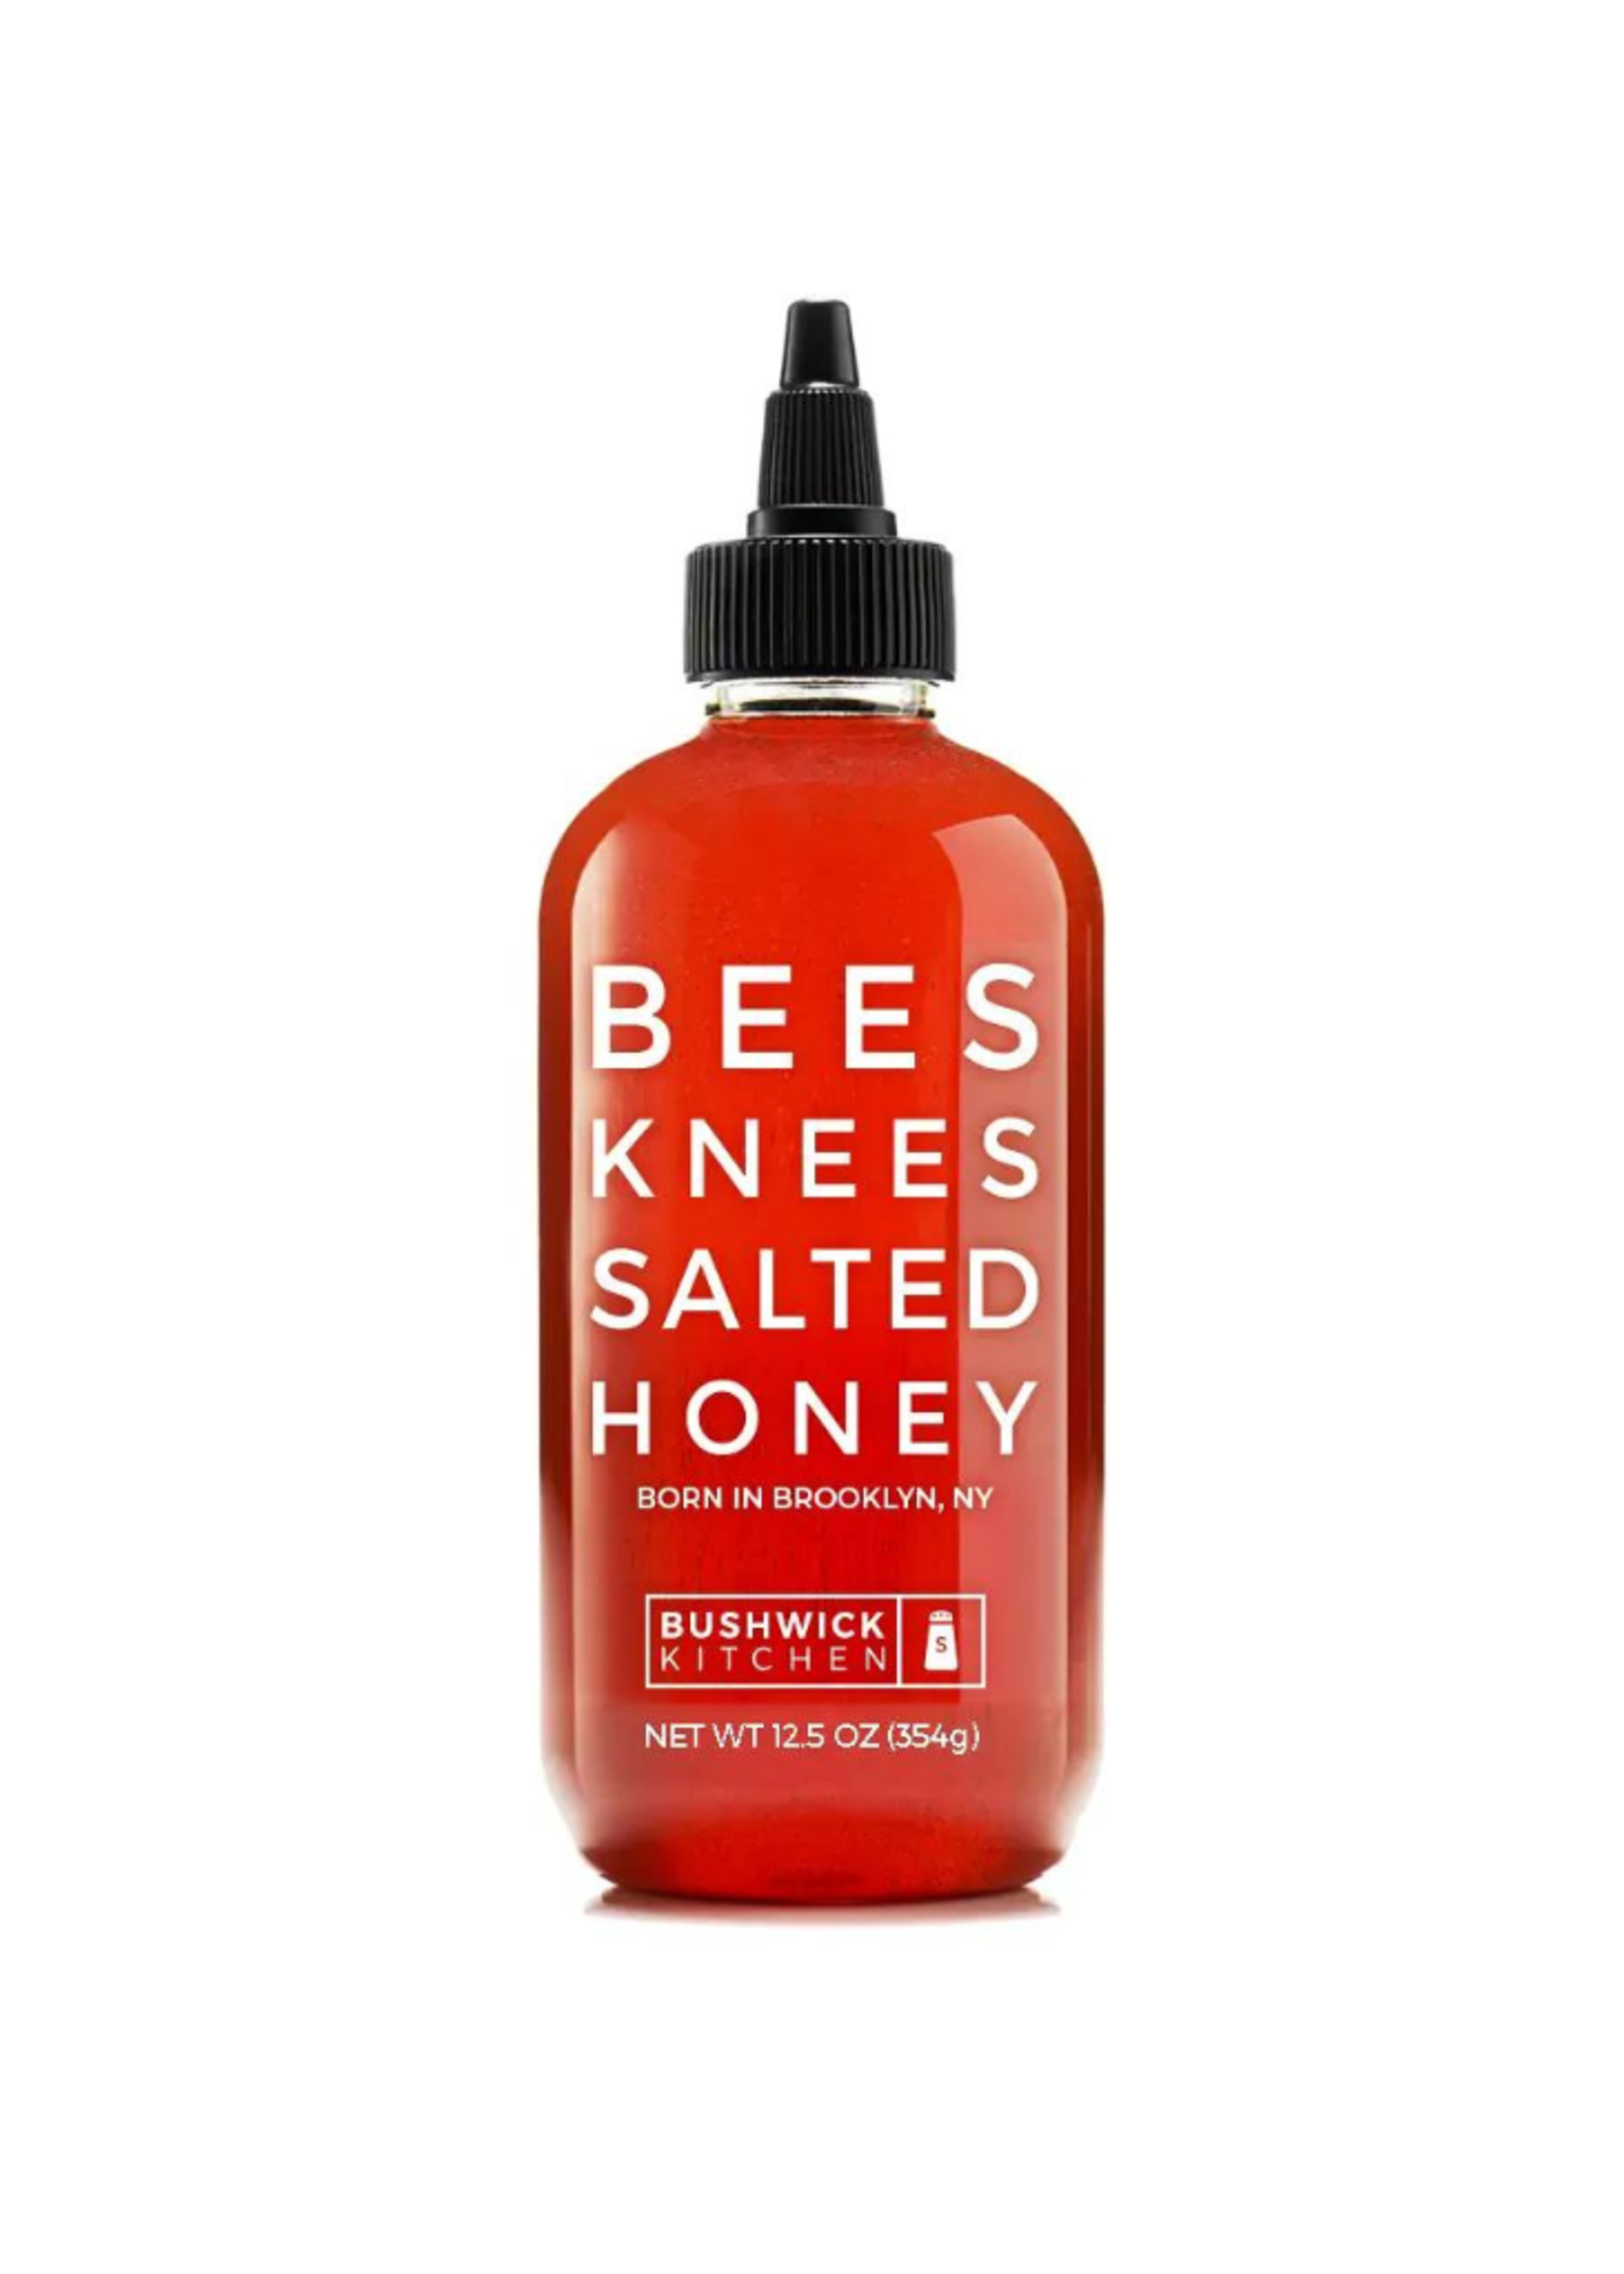 Bushwick Kitchen Bushwick Kitchen - Bees Knees Salted Honey (Vegetarian)